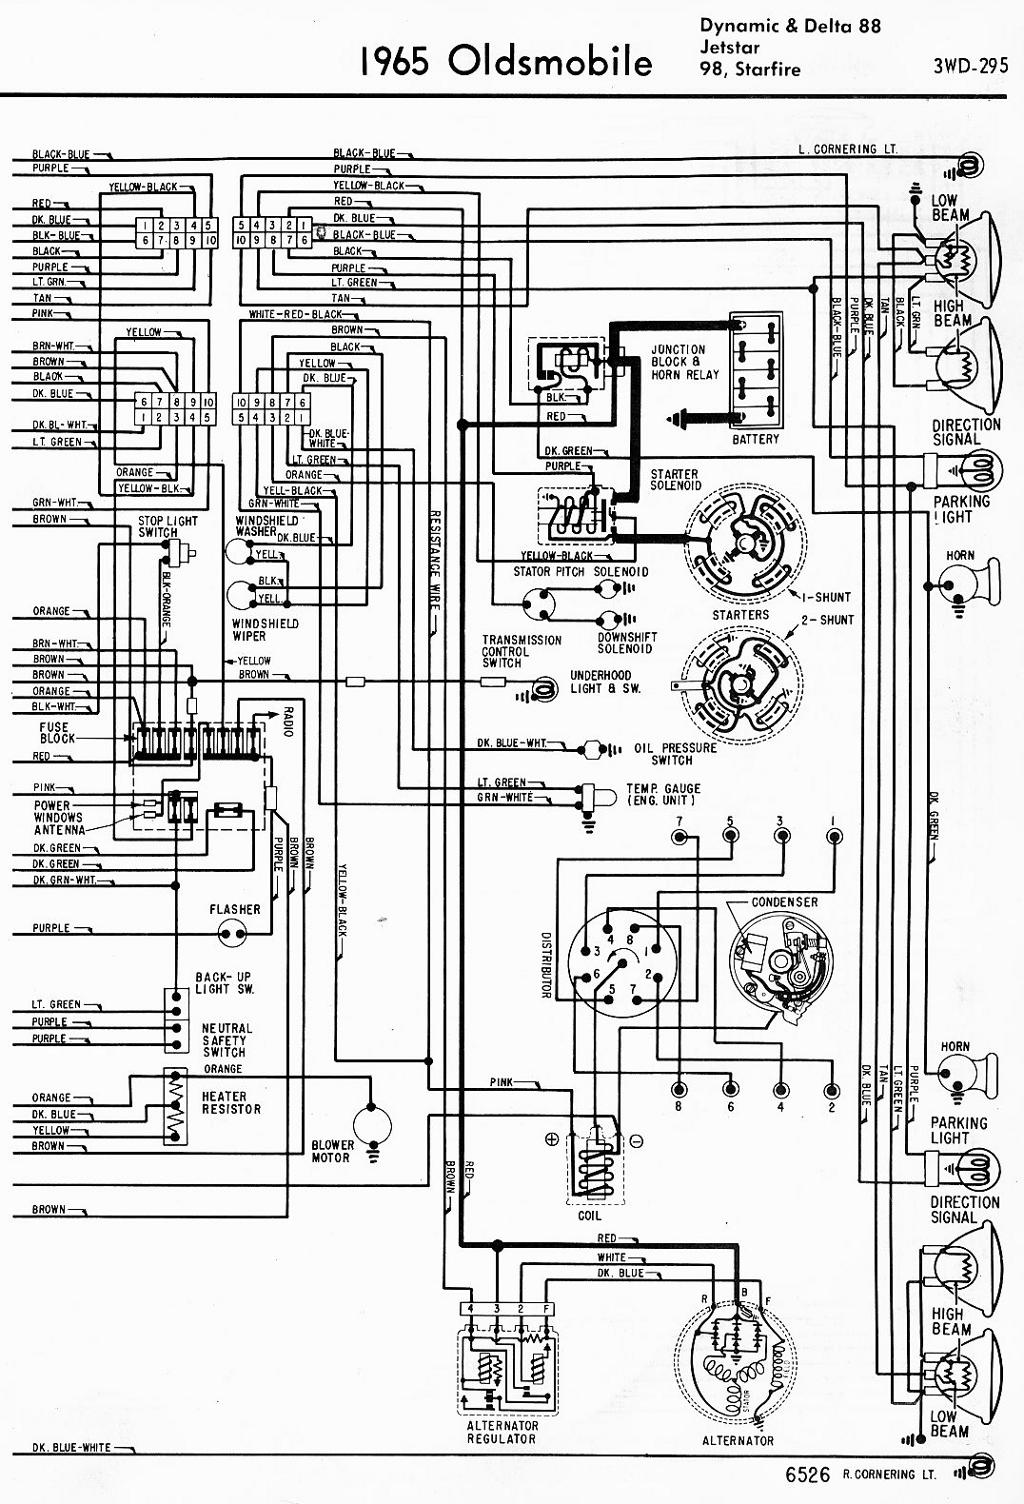 Oldsmobile - car manuals, wiring diagrams PDF & fault codes land rover wiring diagrams 1966 ford mustang diagram 